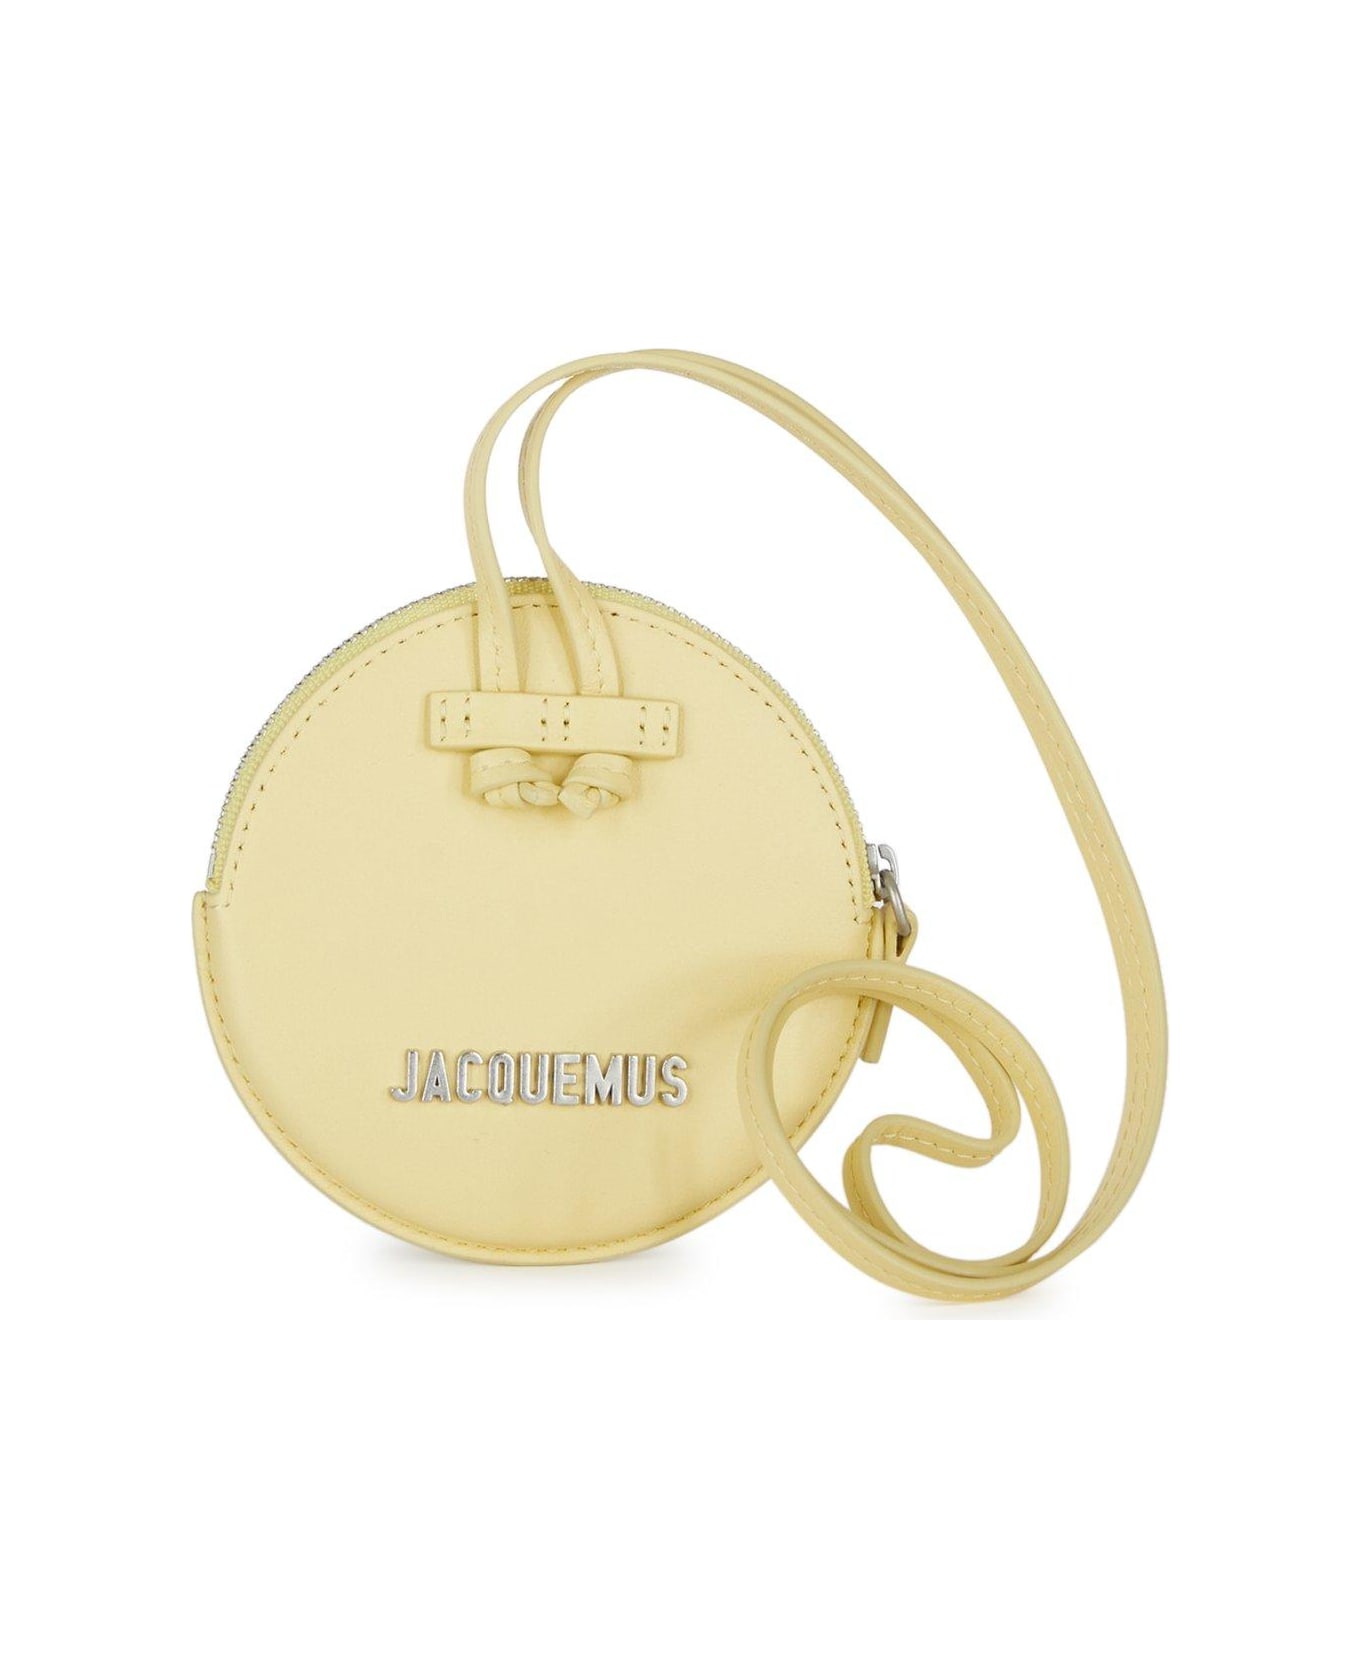 Jacquemus Le Pitchou Coin Purse - Yellow